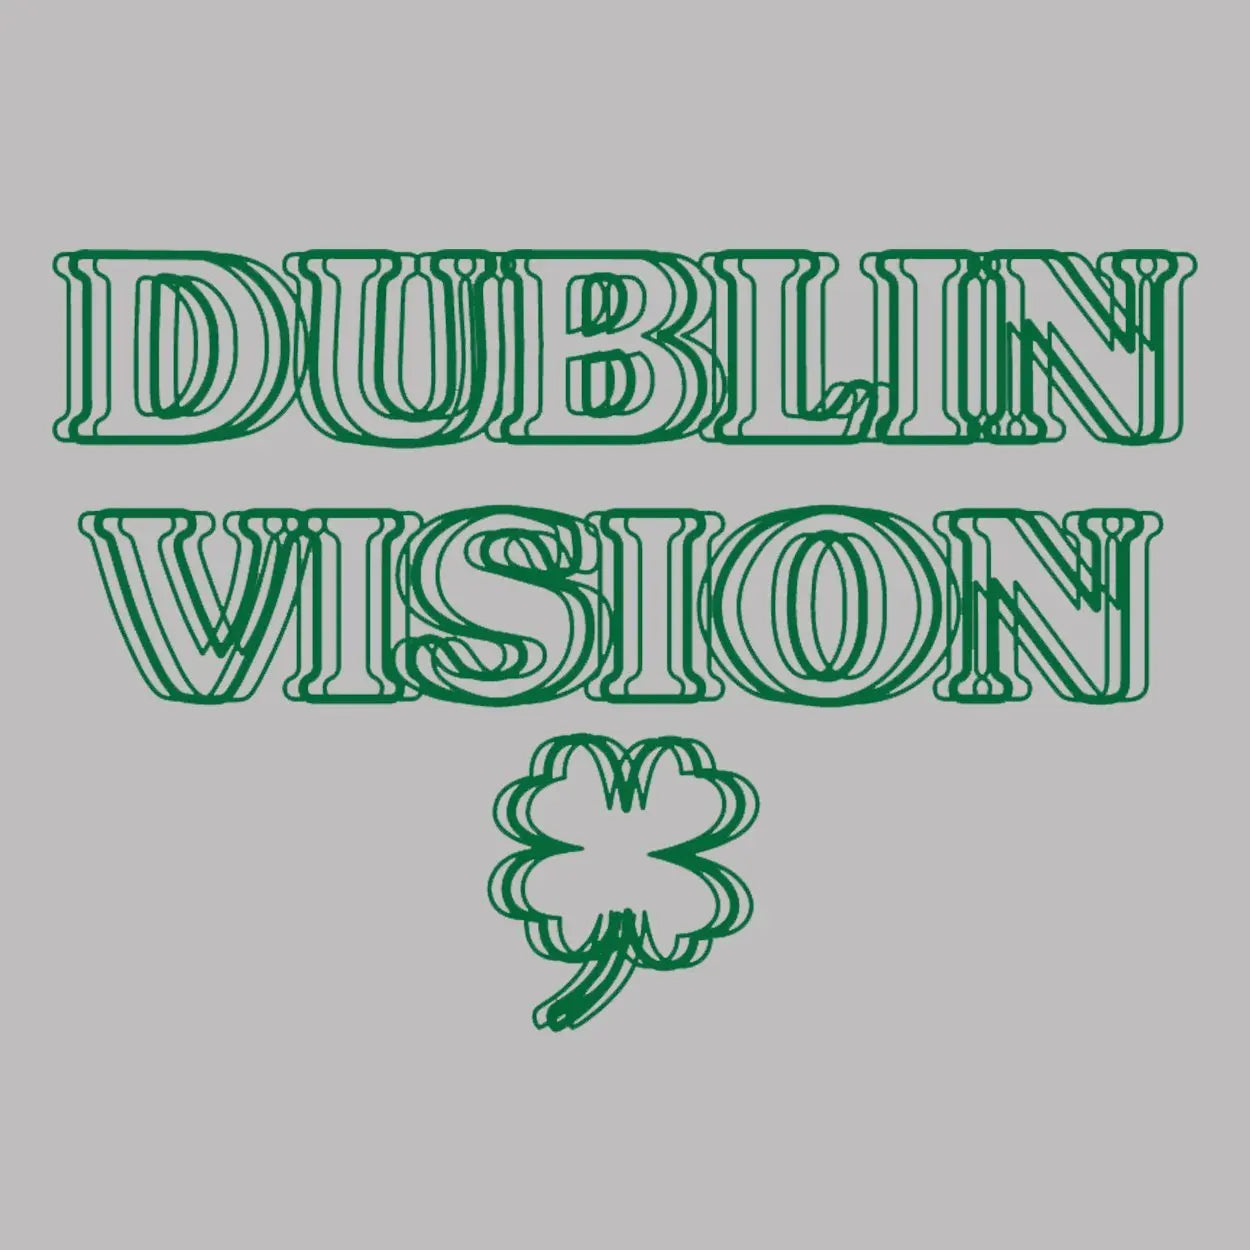 Dublin Vision Tshirt - Donkey Tees